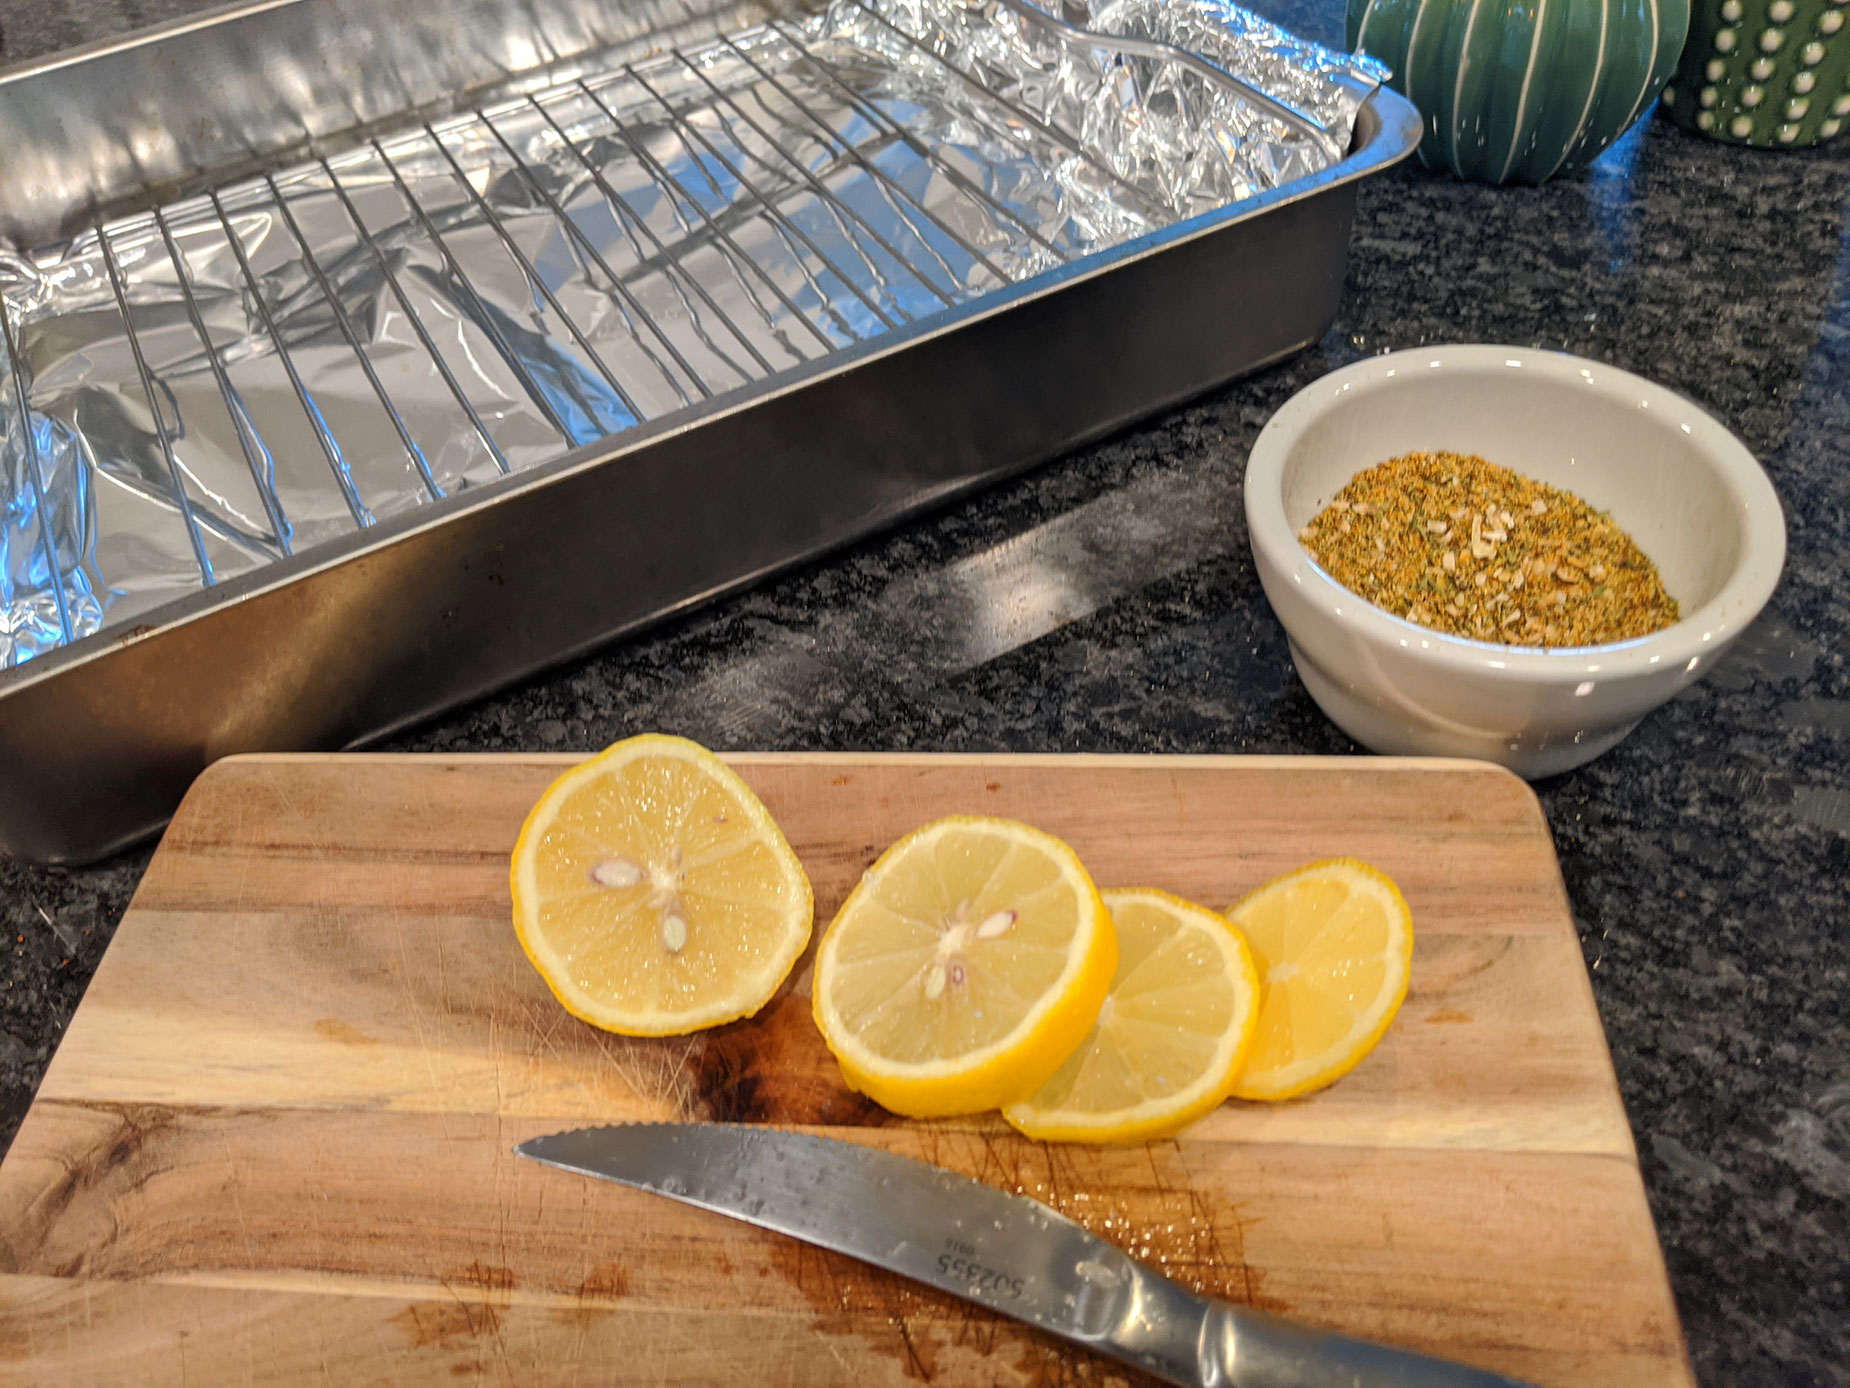 Using the lemons and seasoning for the pork ribs.